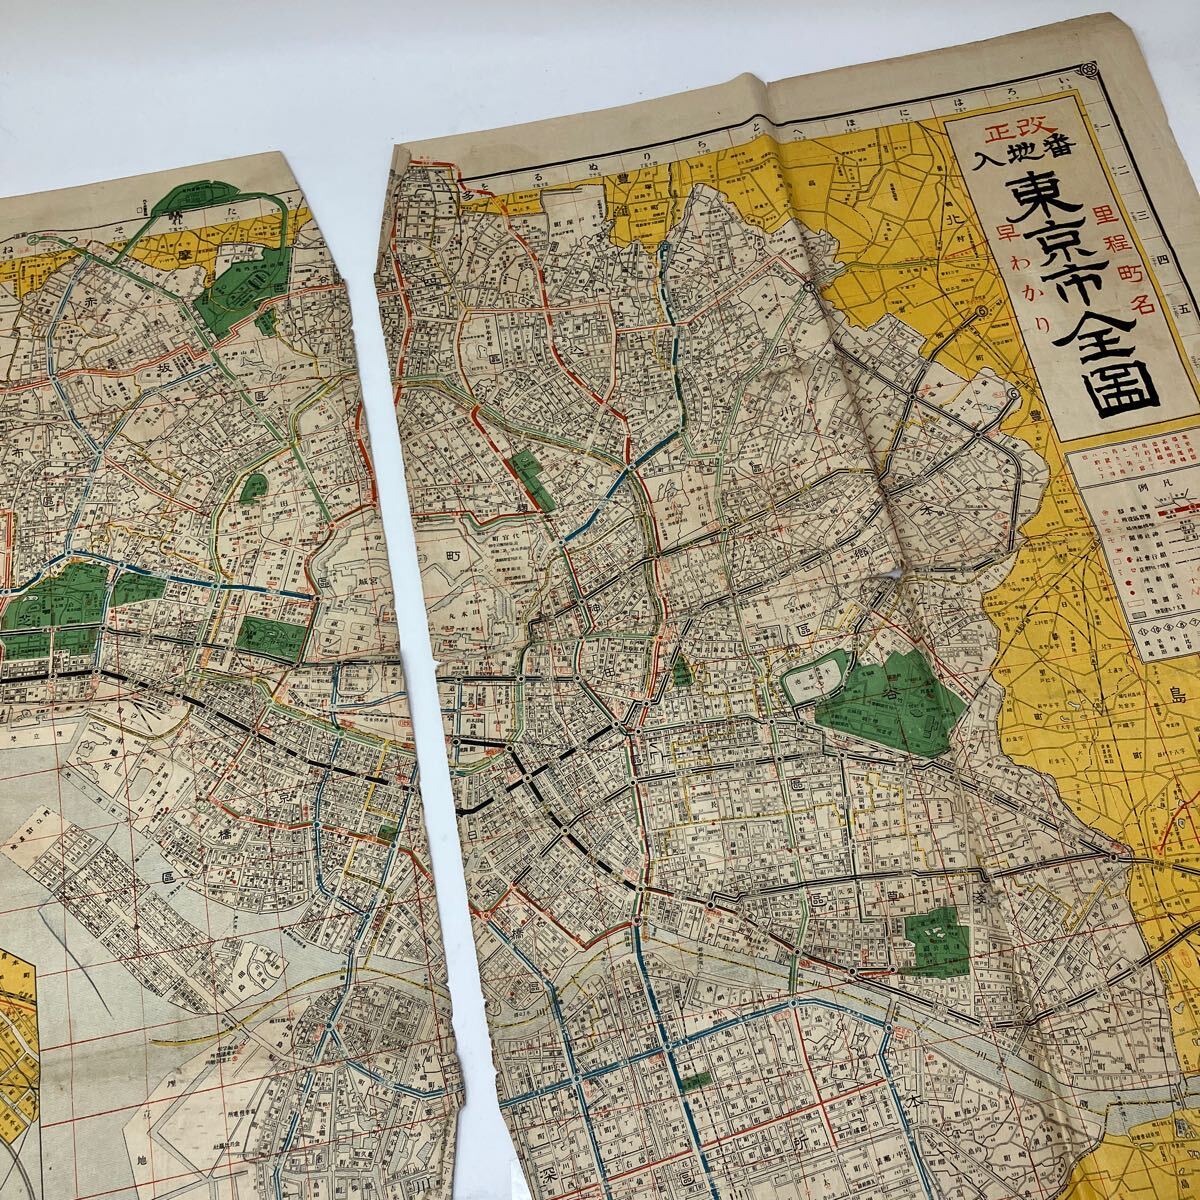 Y0321n【地図】まとめ7枚 東京 横浜市 中央部方面 南部方面 陸地測量部認許 隣接町村併合記念 満50年記念 古地図の画像4